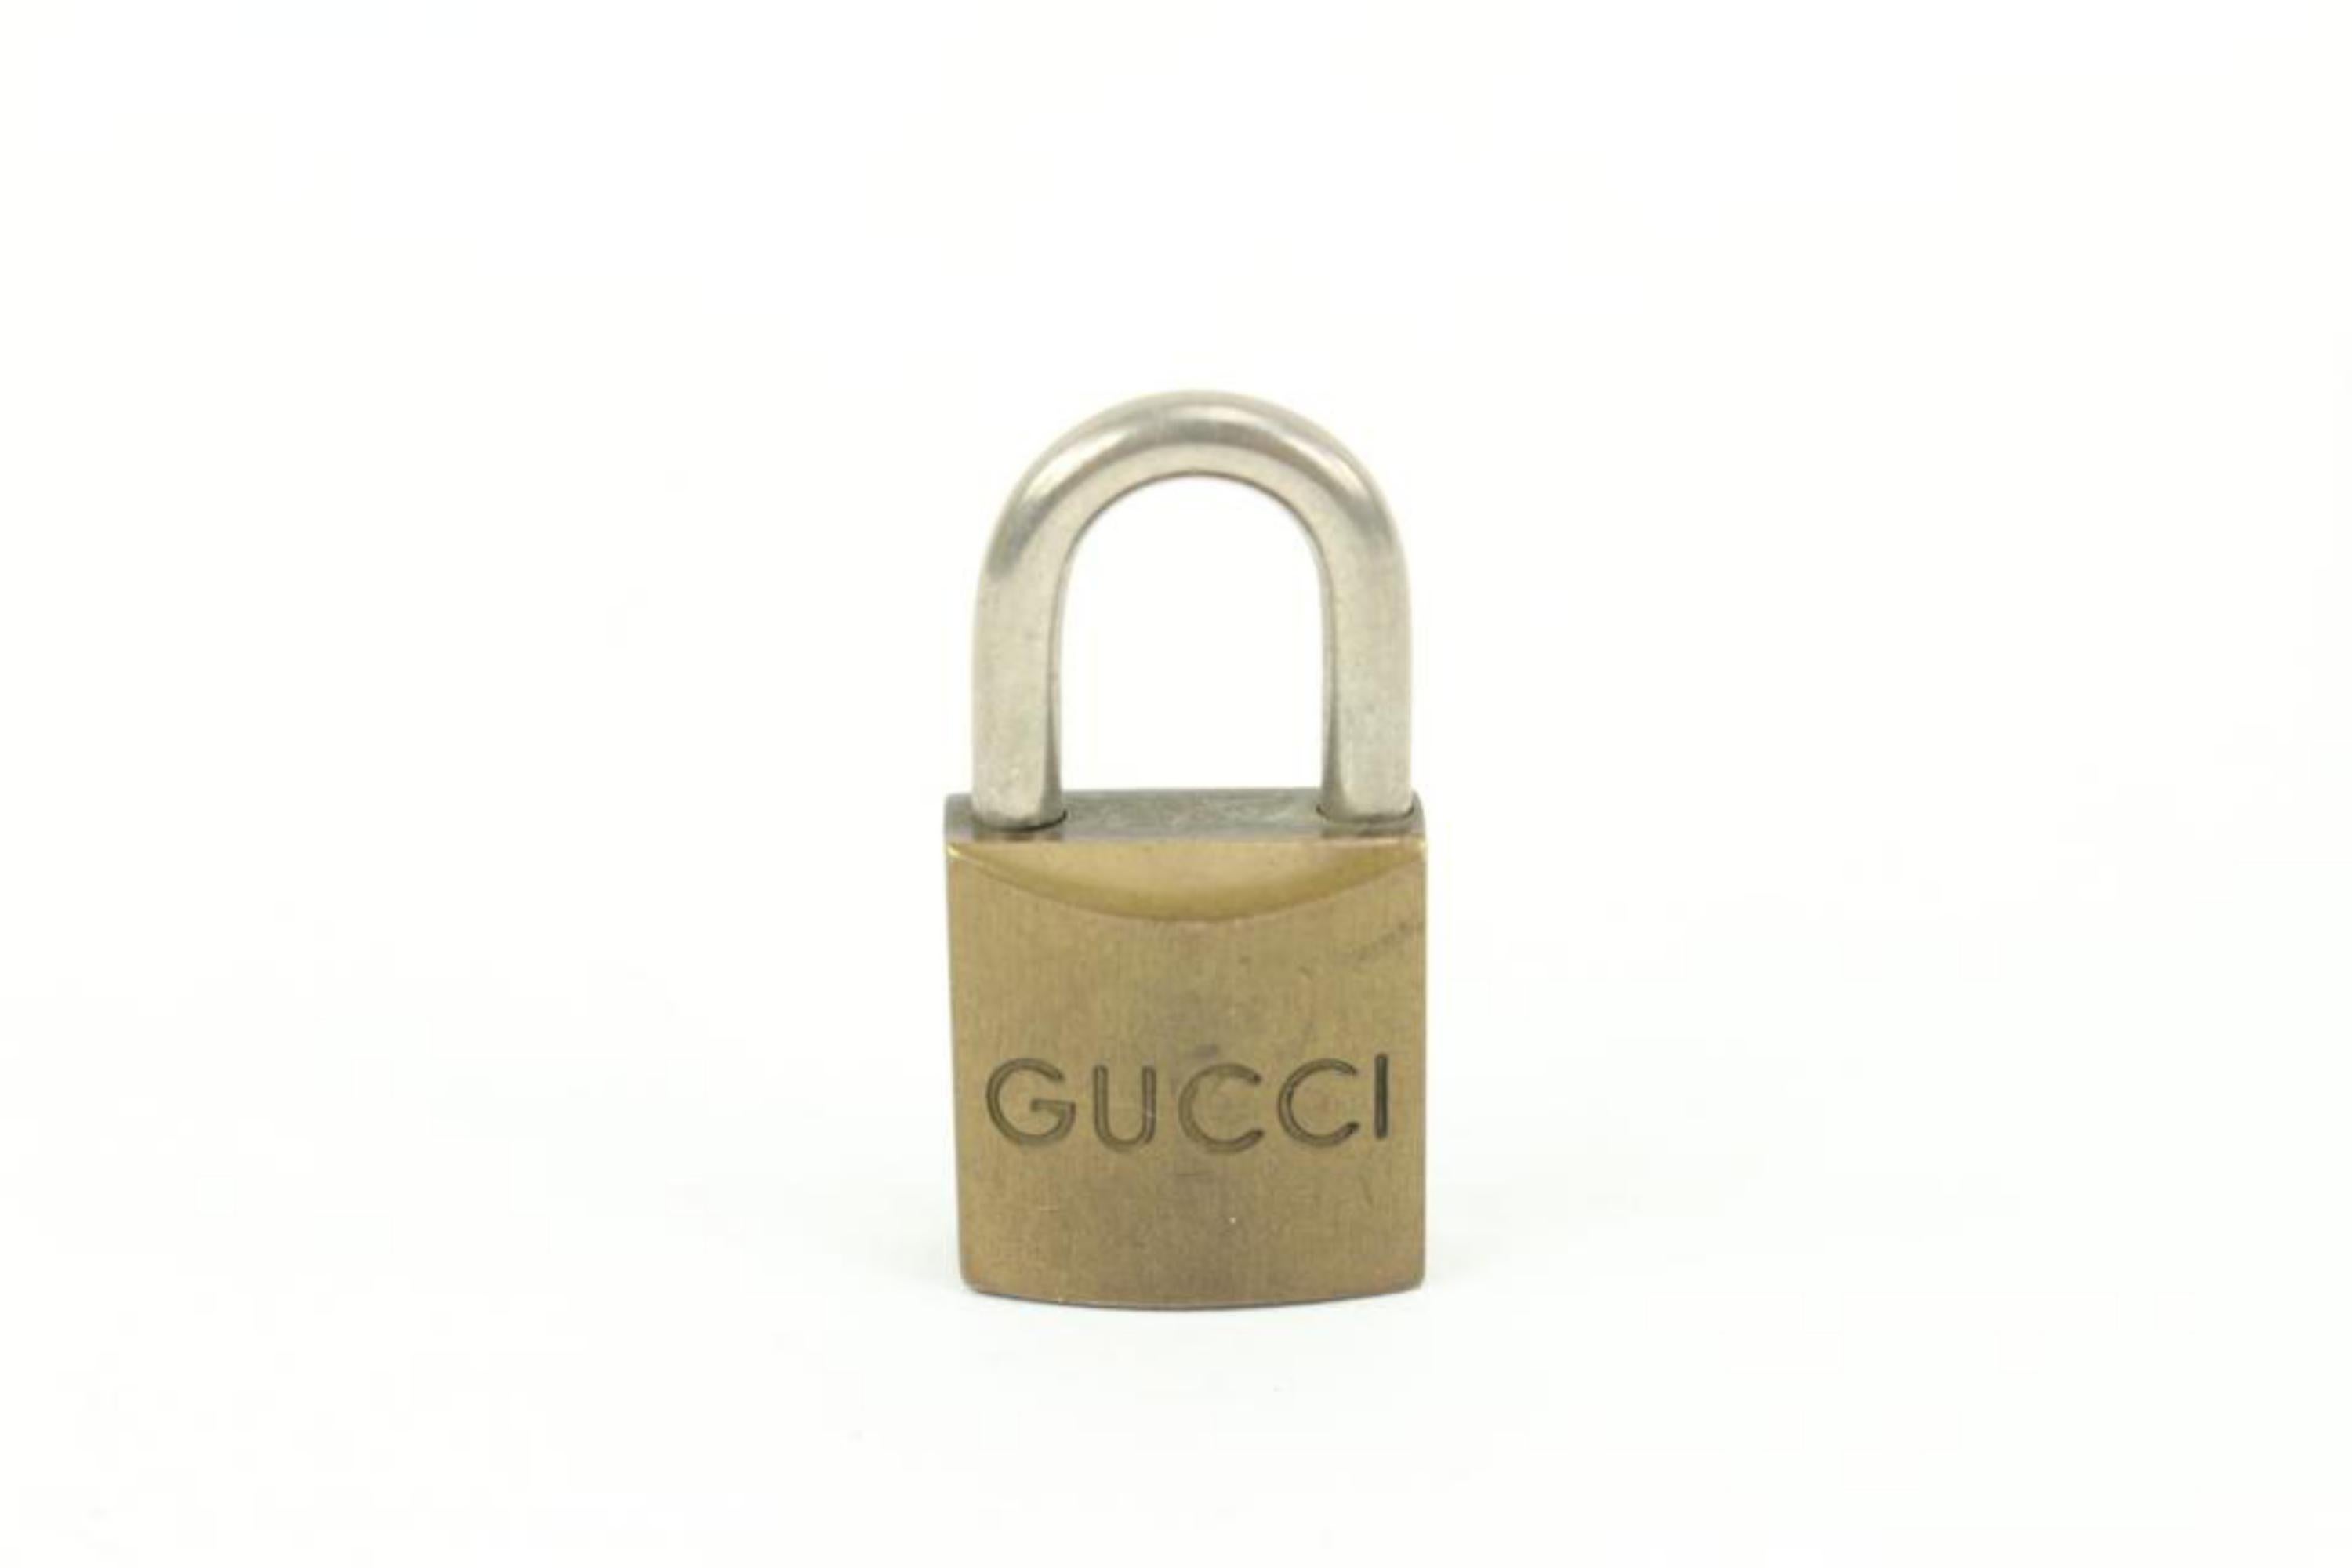 Women's Gucci Vintage Brass Lock and Key Set Cadena Padlock Bag Charm 17g34s